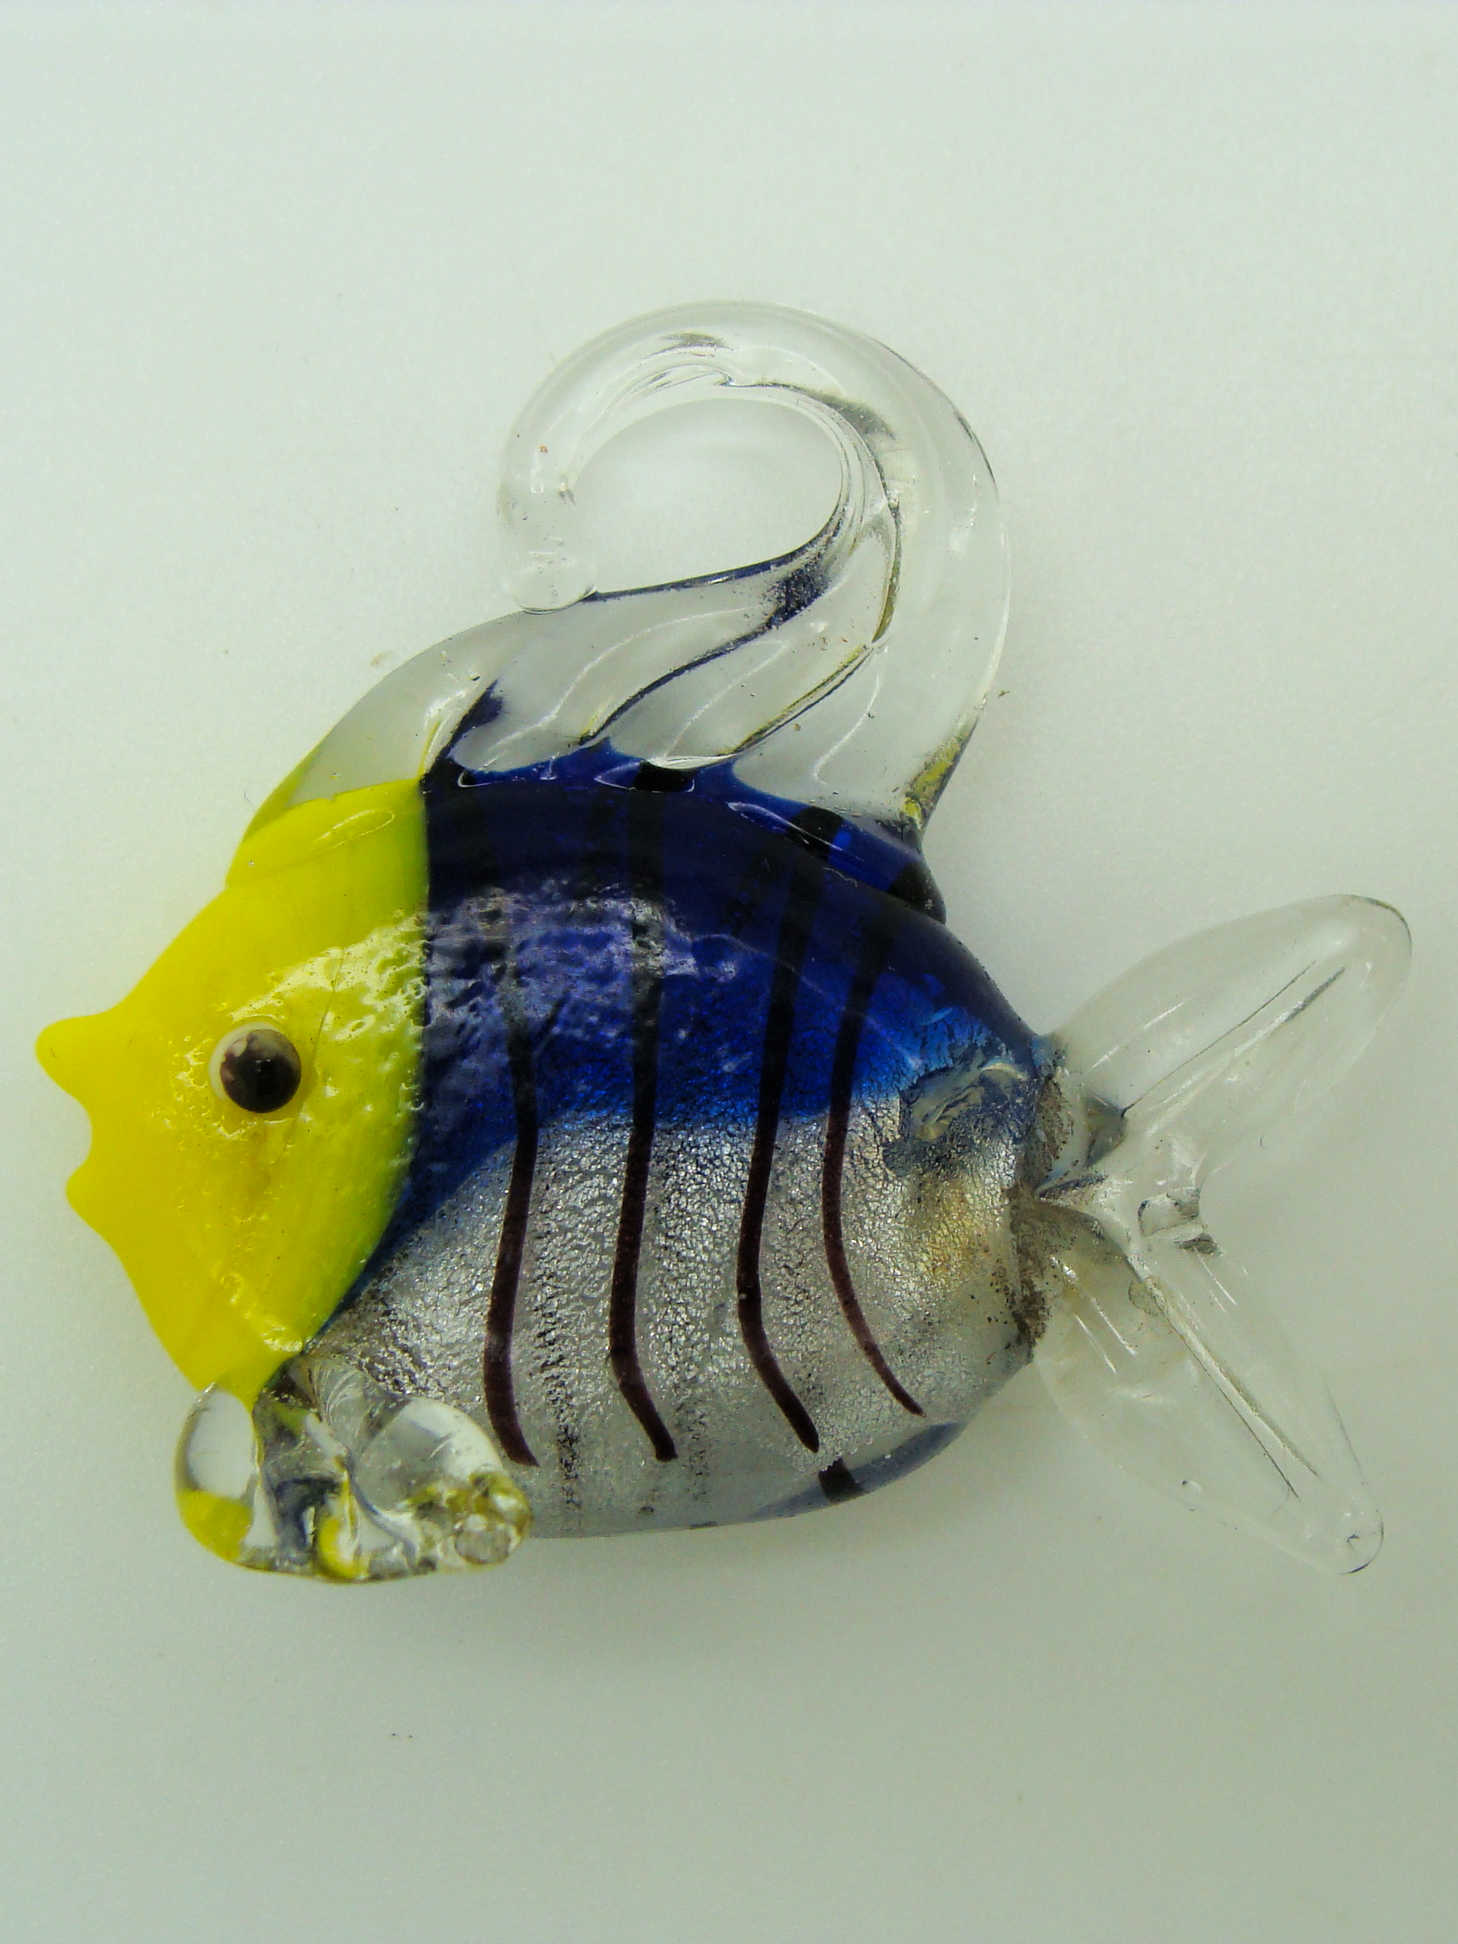 Pend-317-1 pendentif poisson bleu fonce argente animal